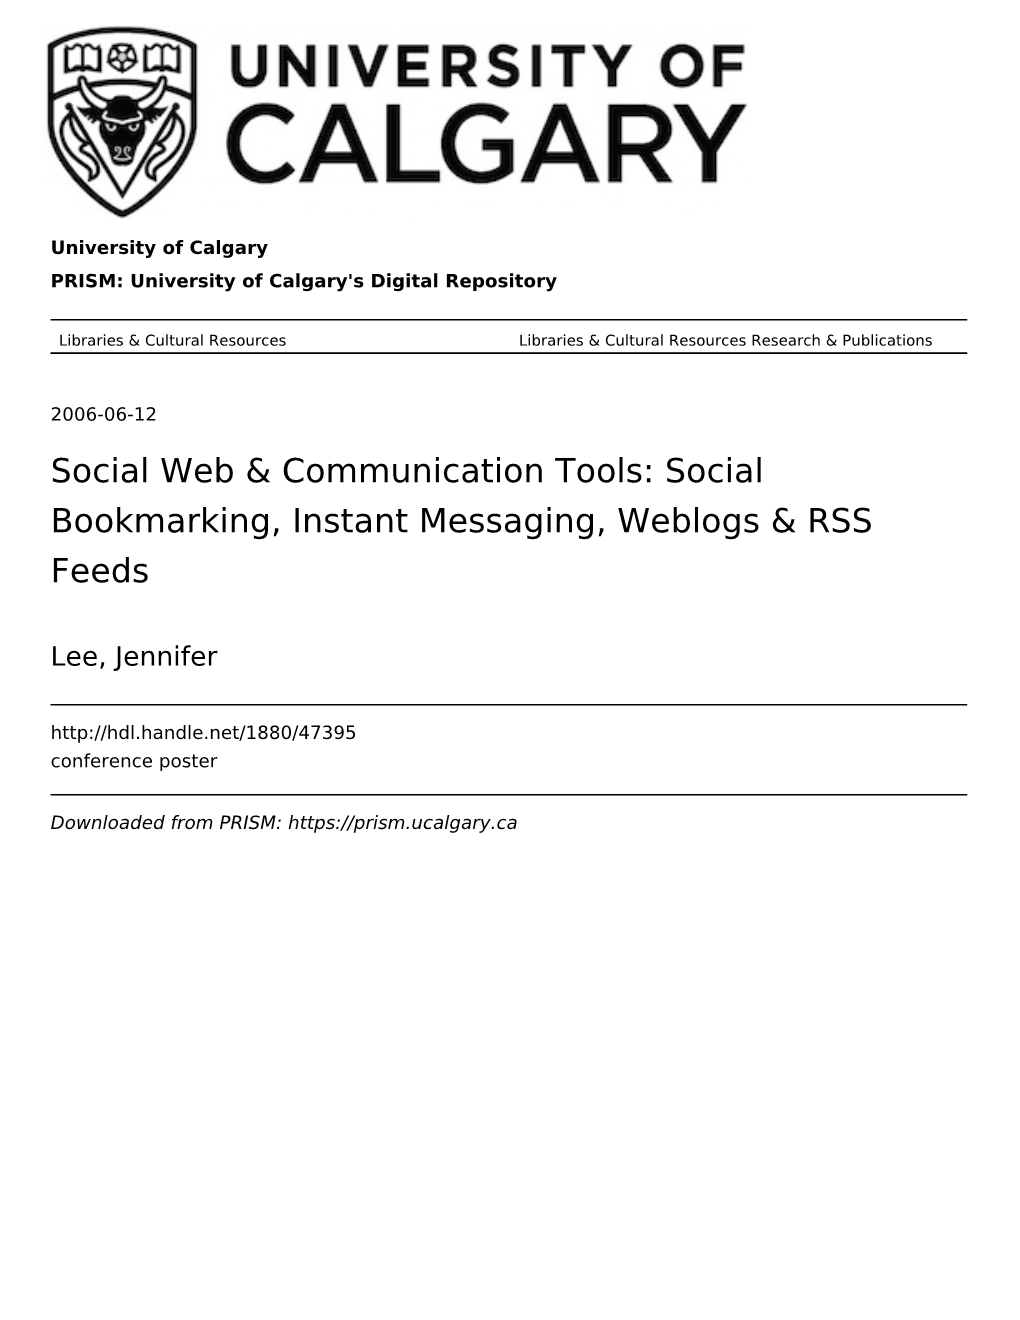 Social Bookmarking, Instant Messaging, Weblogs & RSS Feeds